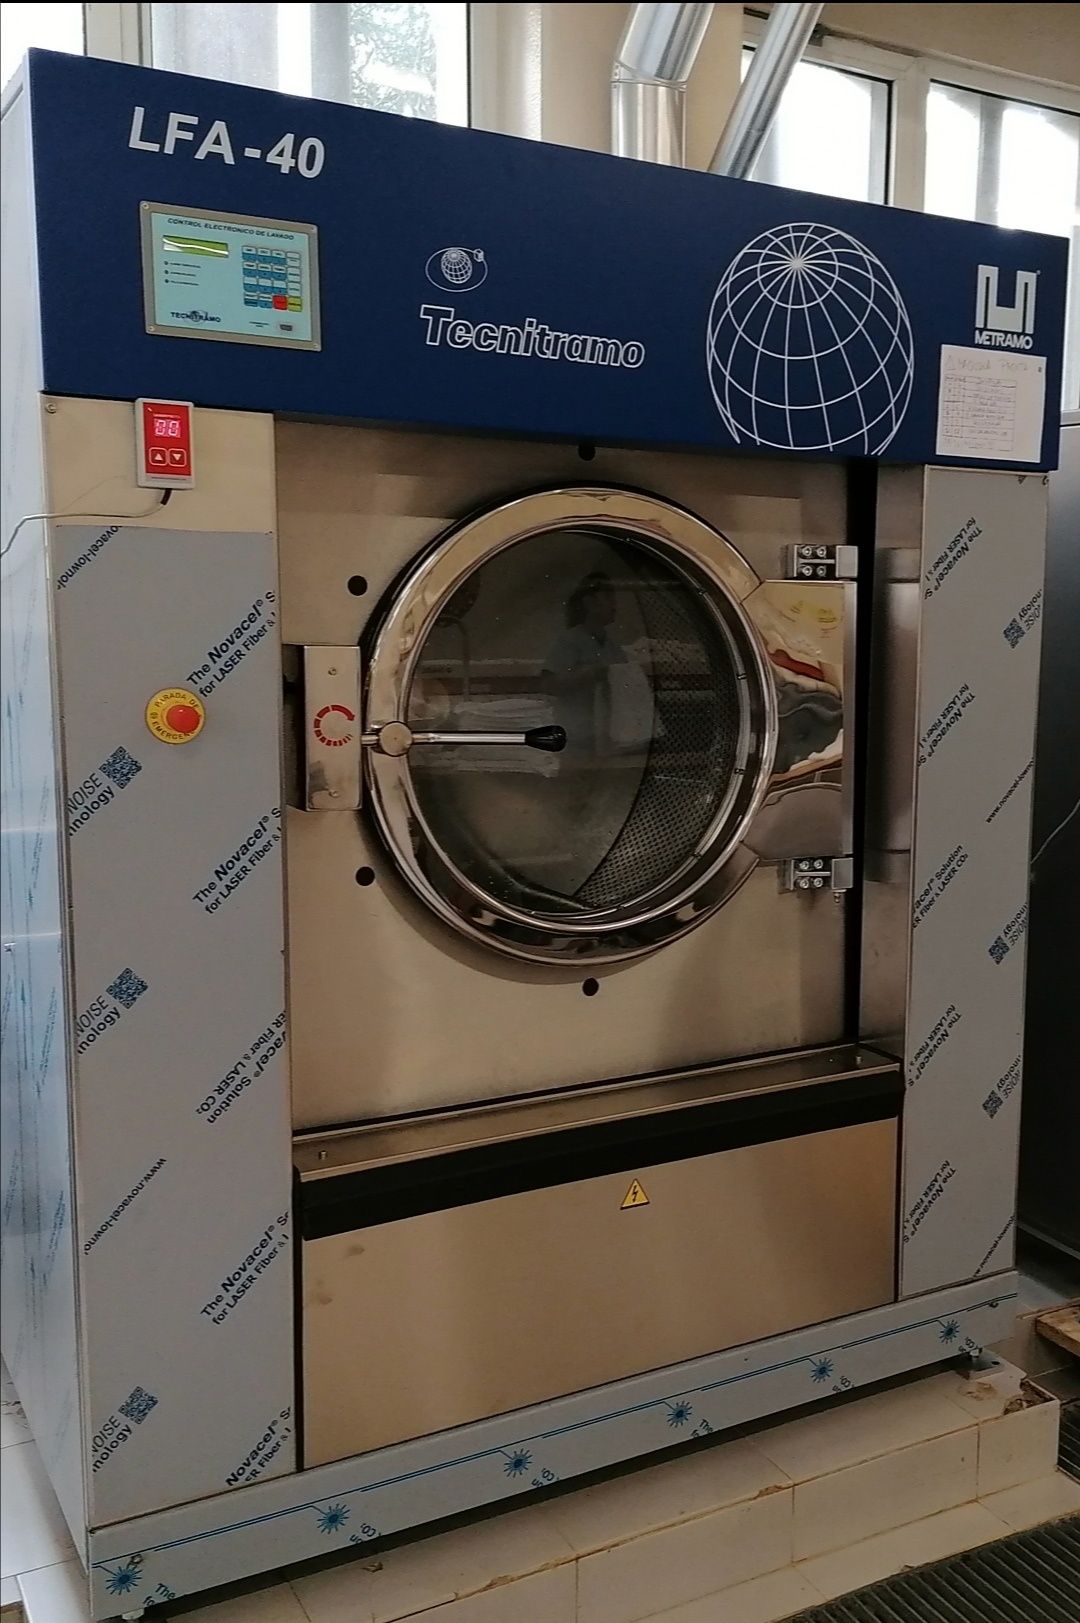 Fábricantes em portugal de lavandaria lavar roupa industrial